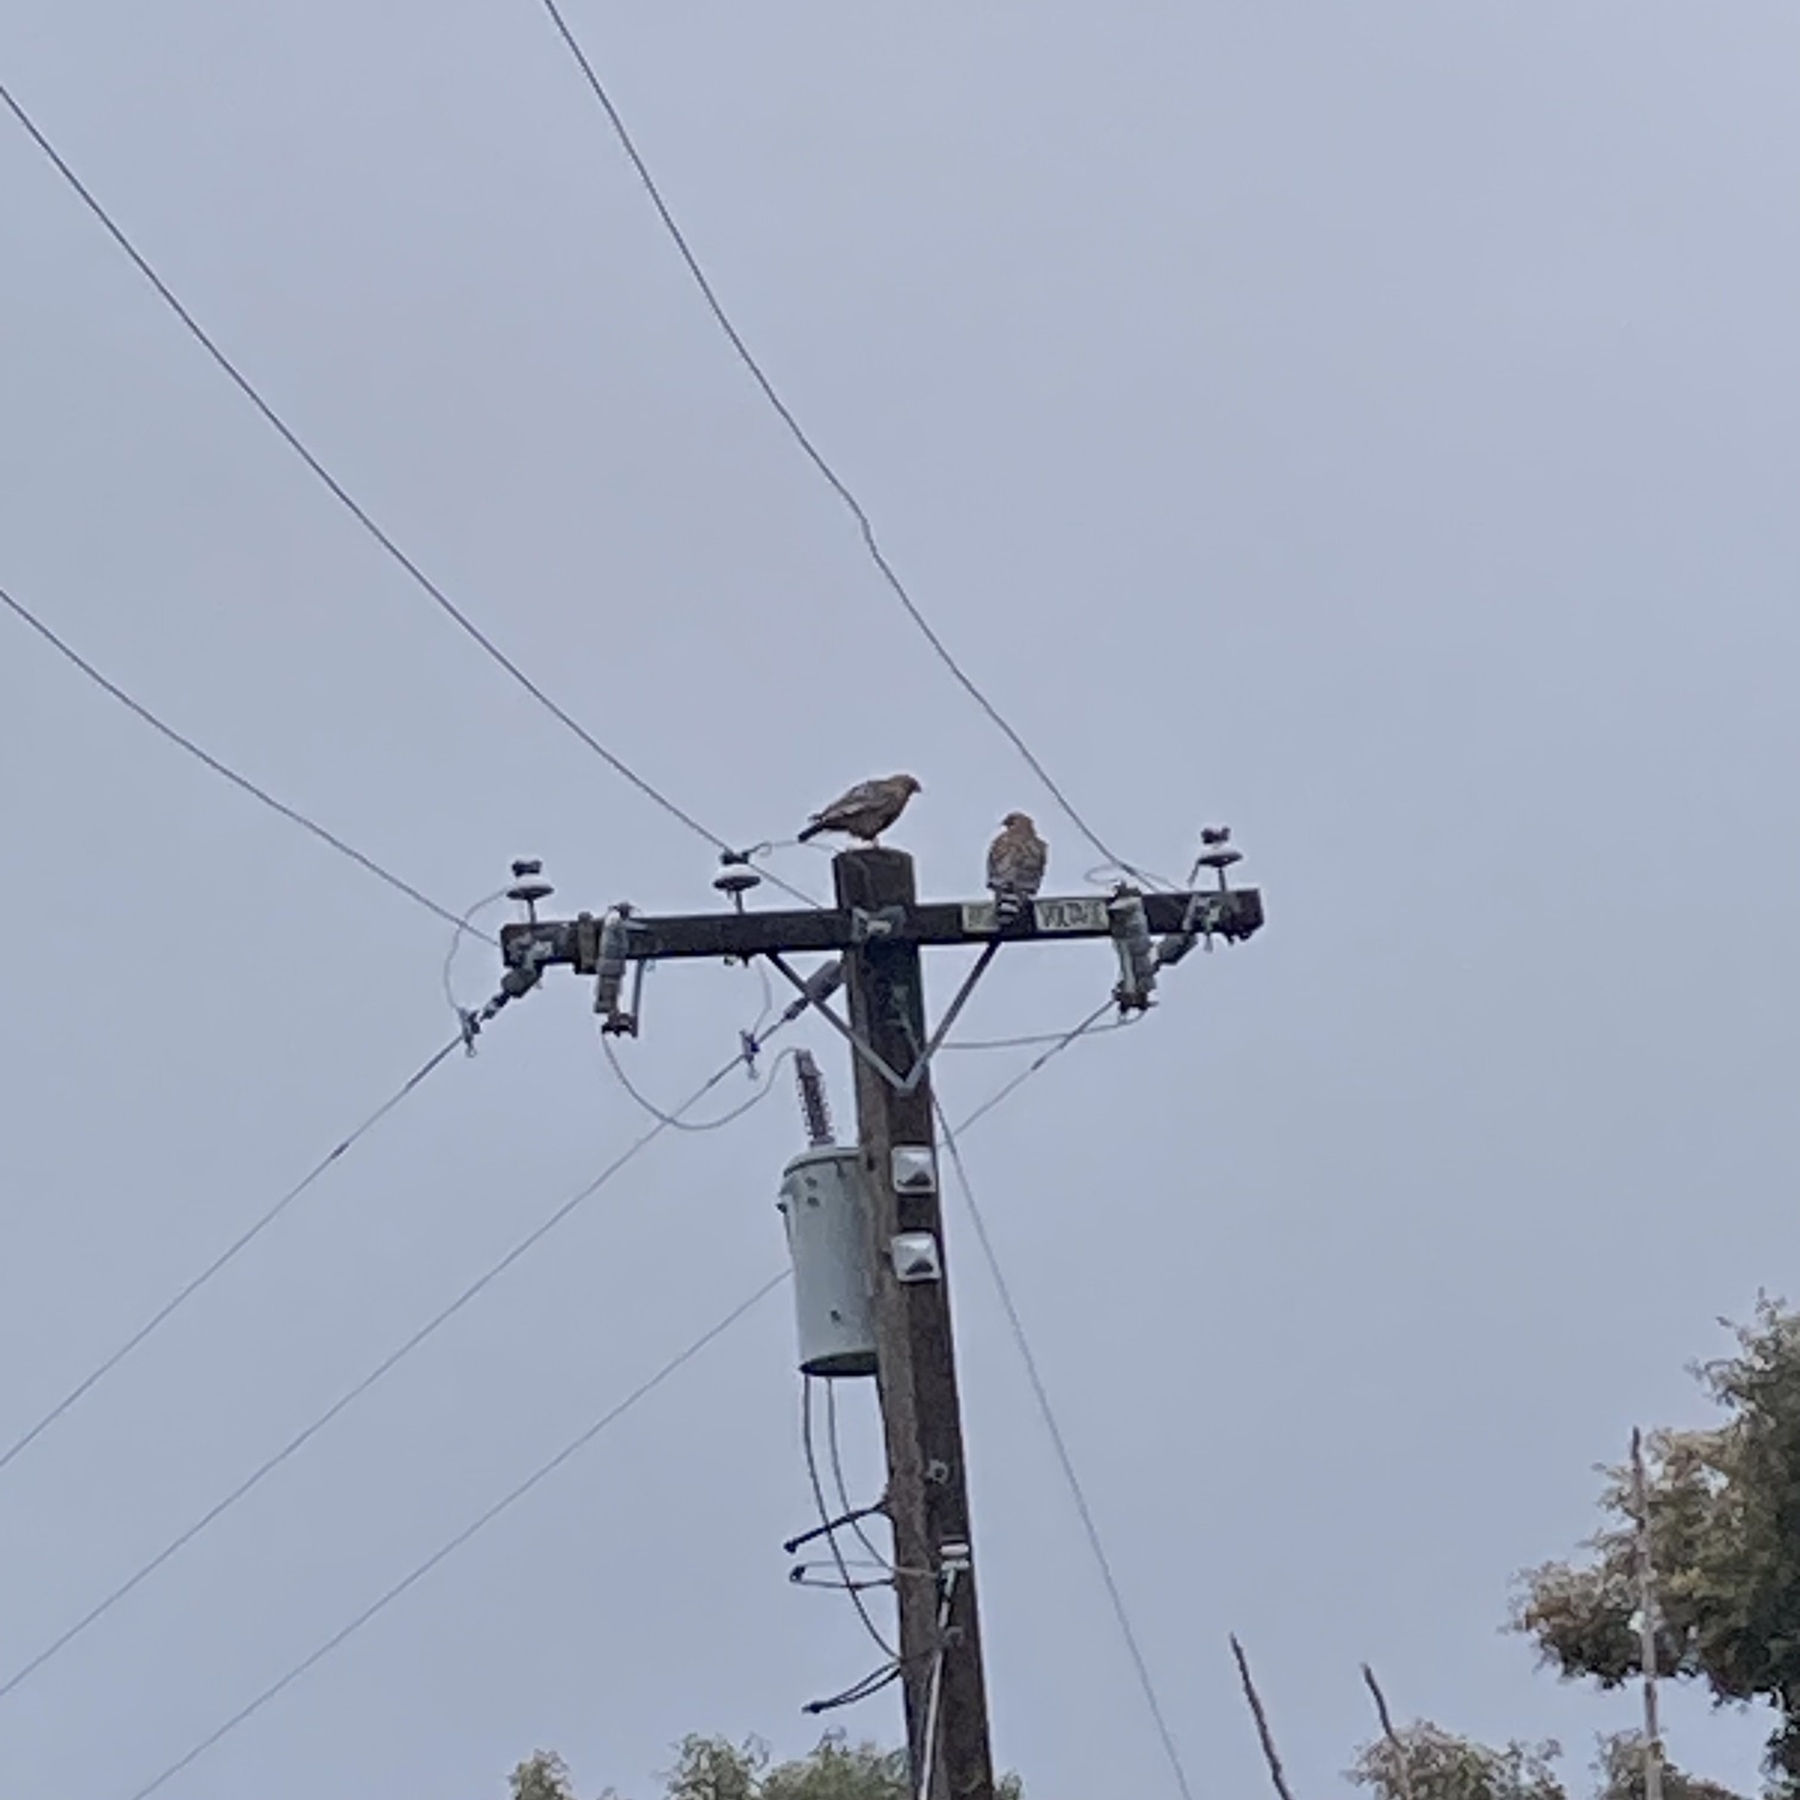 Hawks sitting on a telephone pole. 